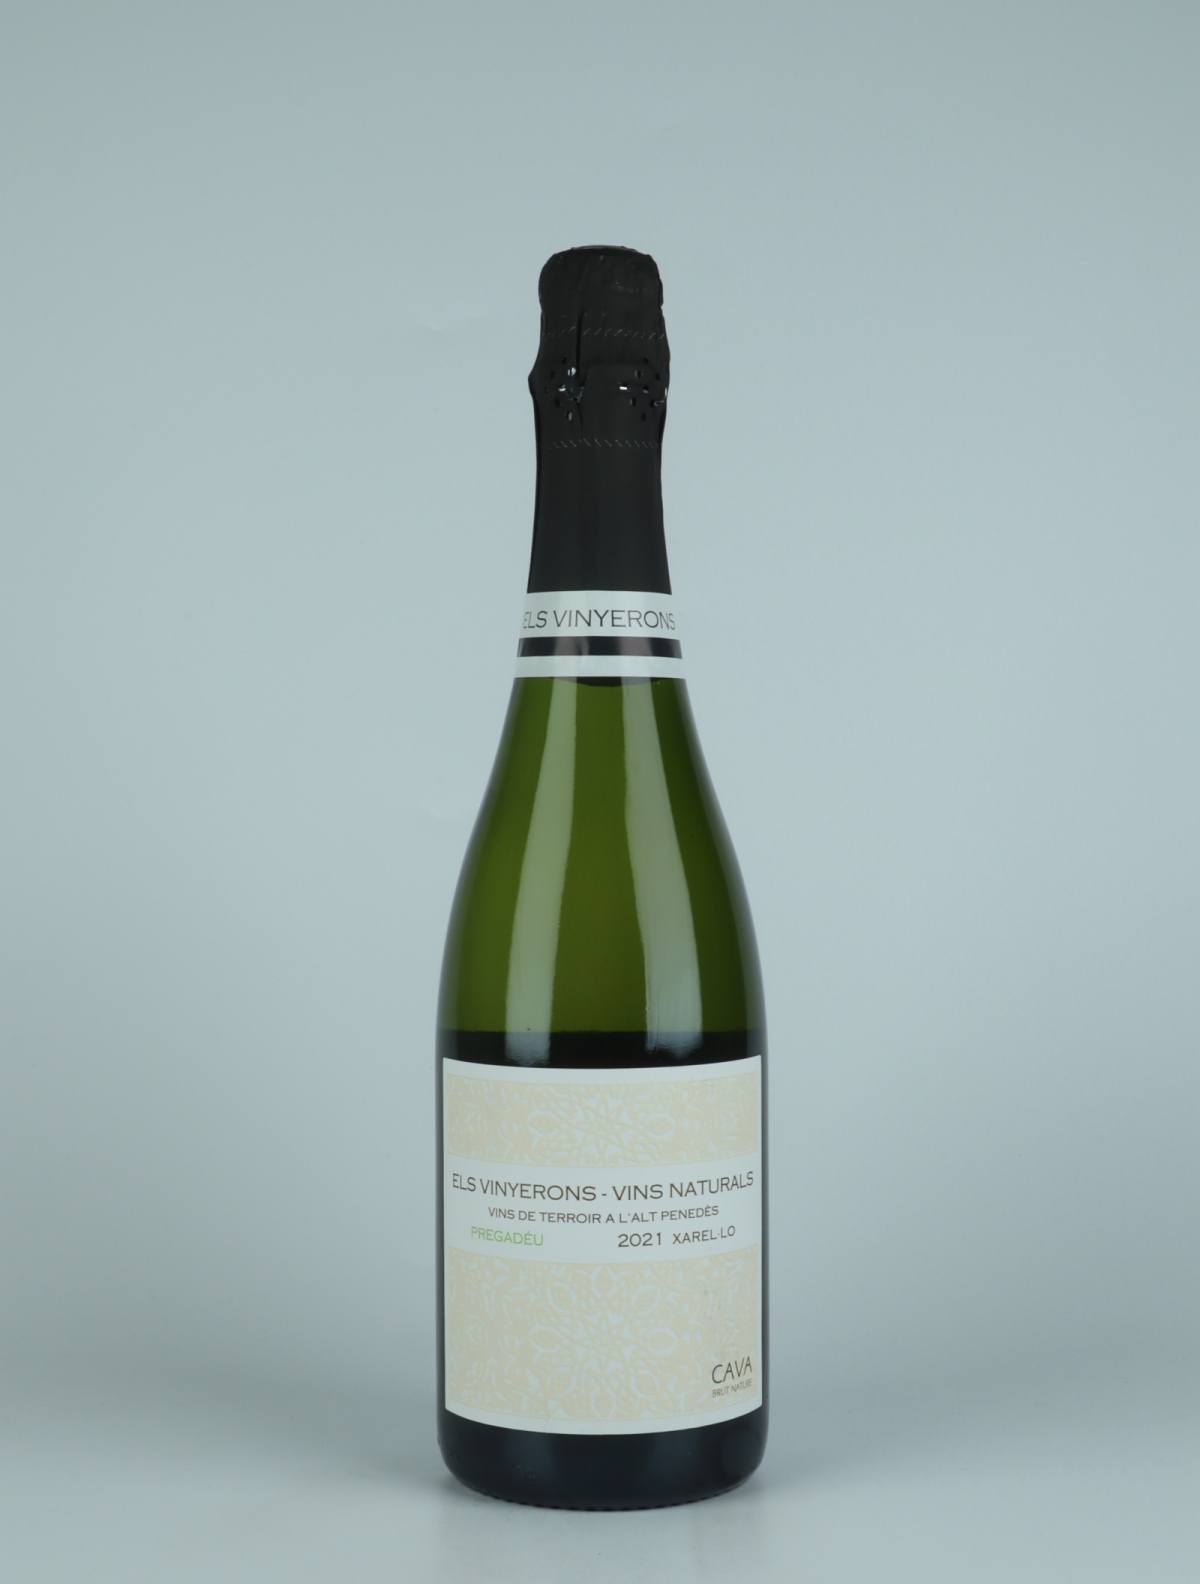 A bottle 2021 Cava - Pregadeu Sparkling from Els Vinyerons, Penedès in Spain